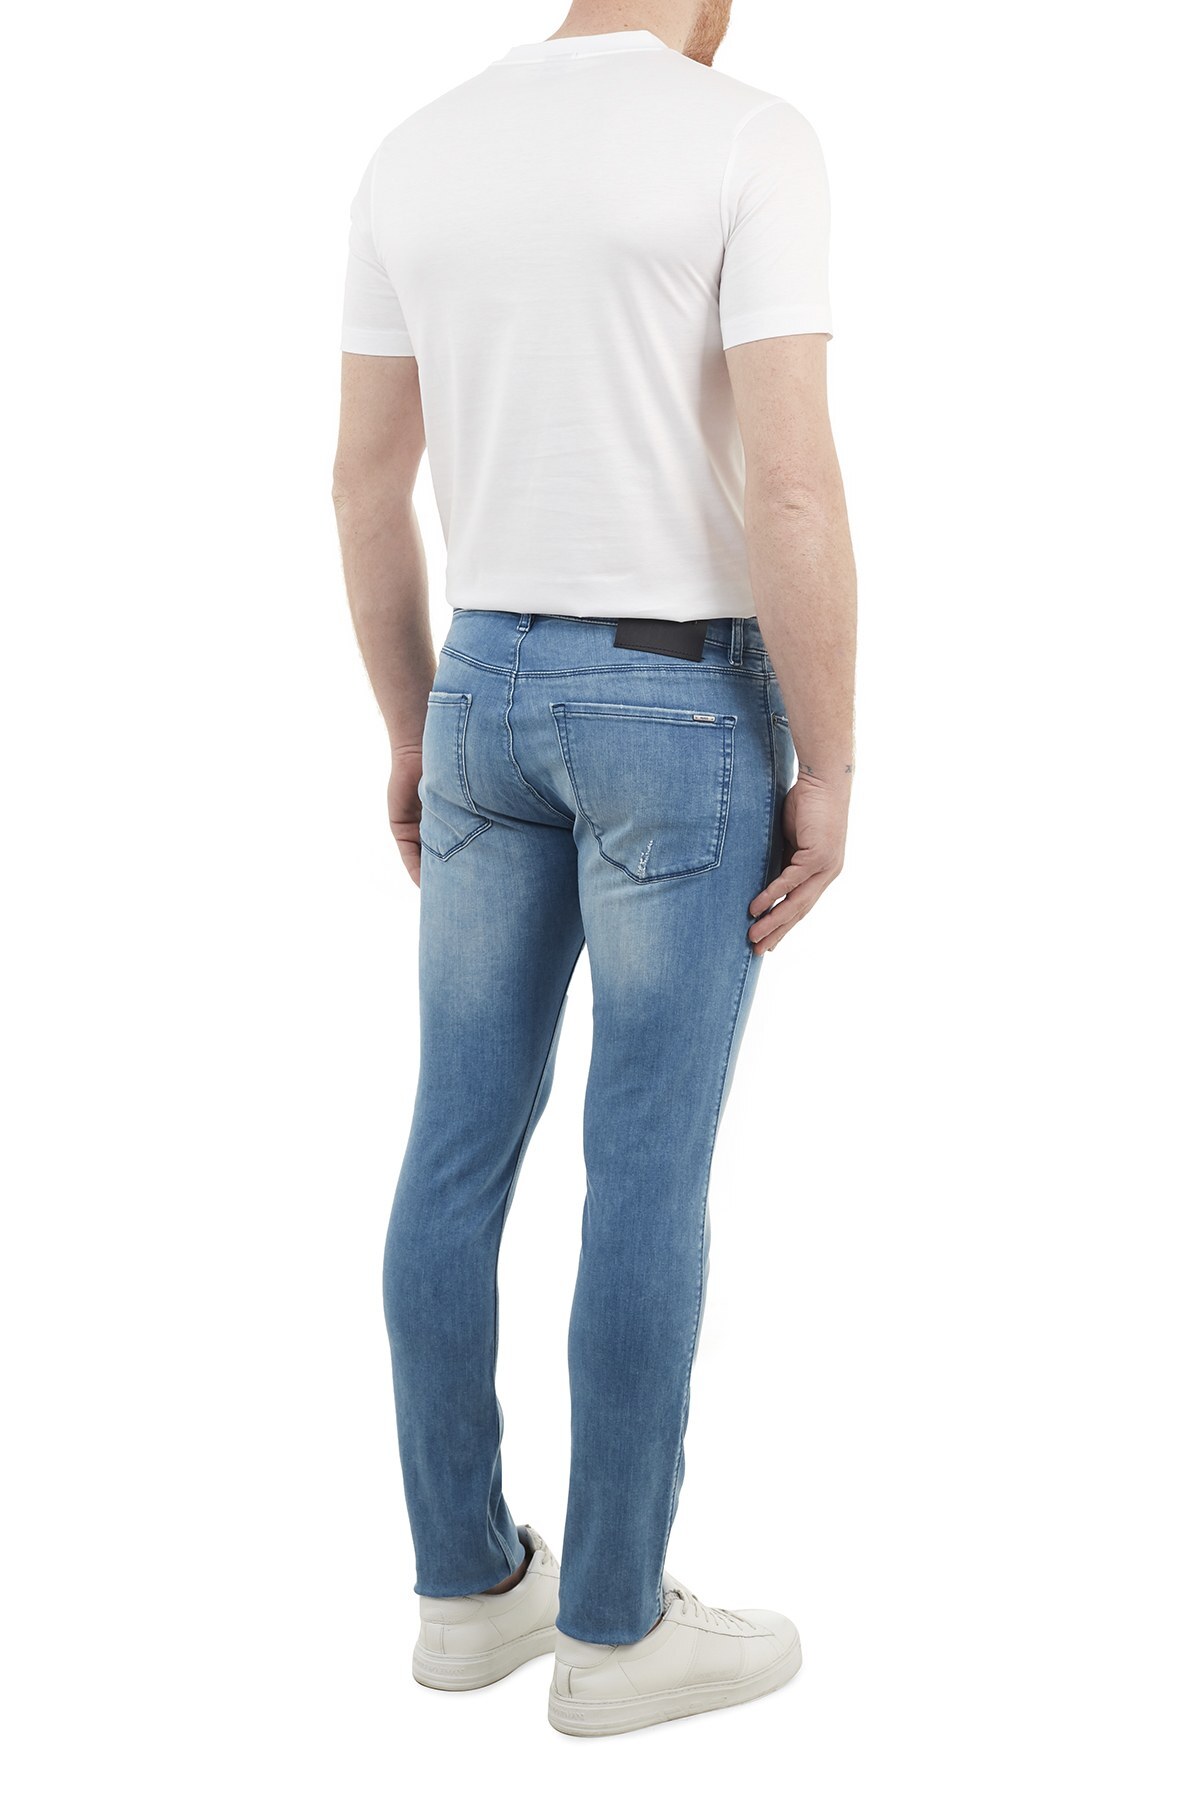 Hugo Boss Slim Fit Pamuklu Jeans Erkek Kot Pantolon 50446965 455 MAVİ